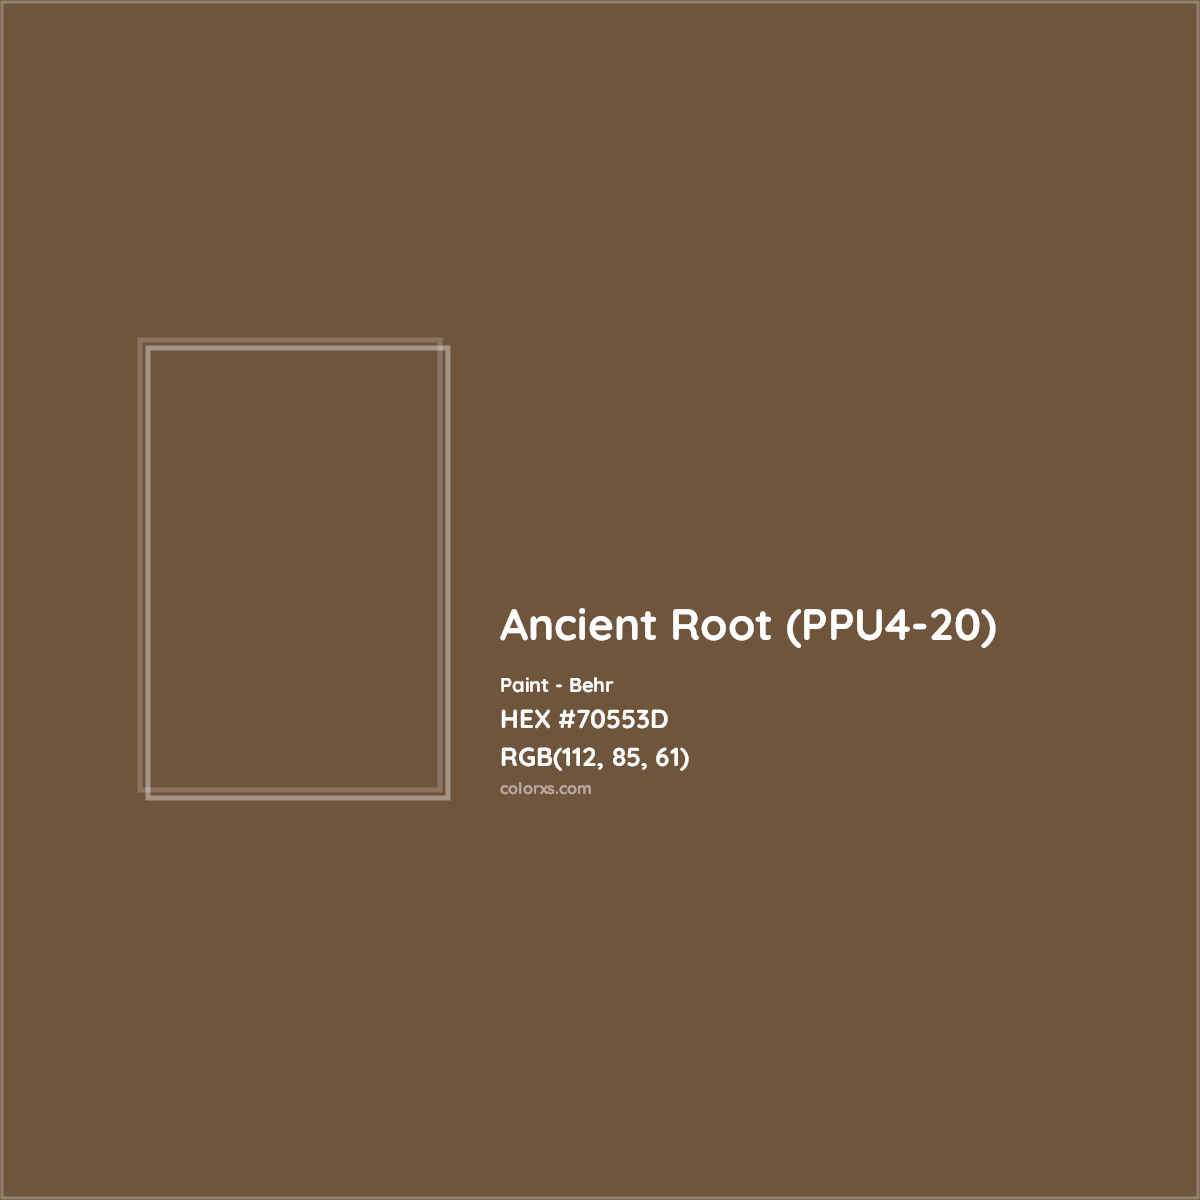 HEX #70553D Ancient Root (PPU4-20) Paint Behr - Color Code